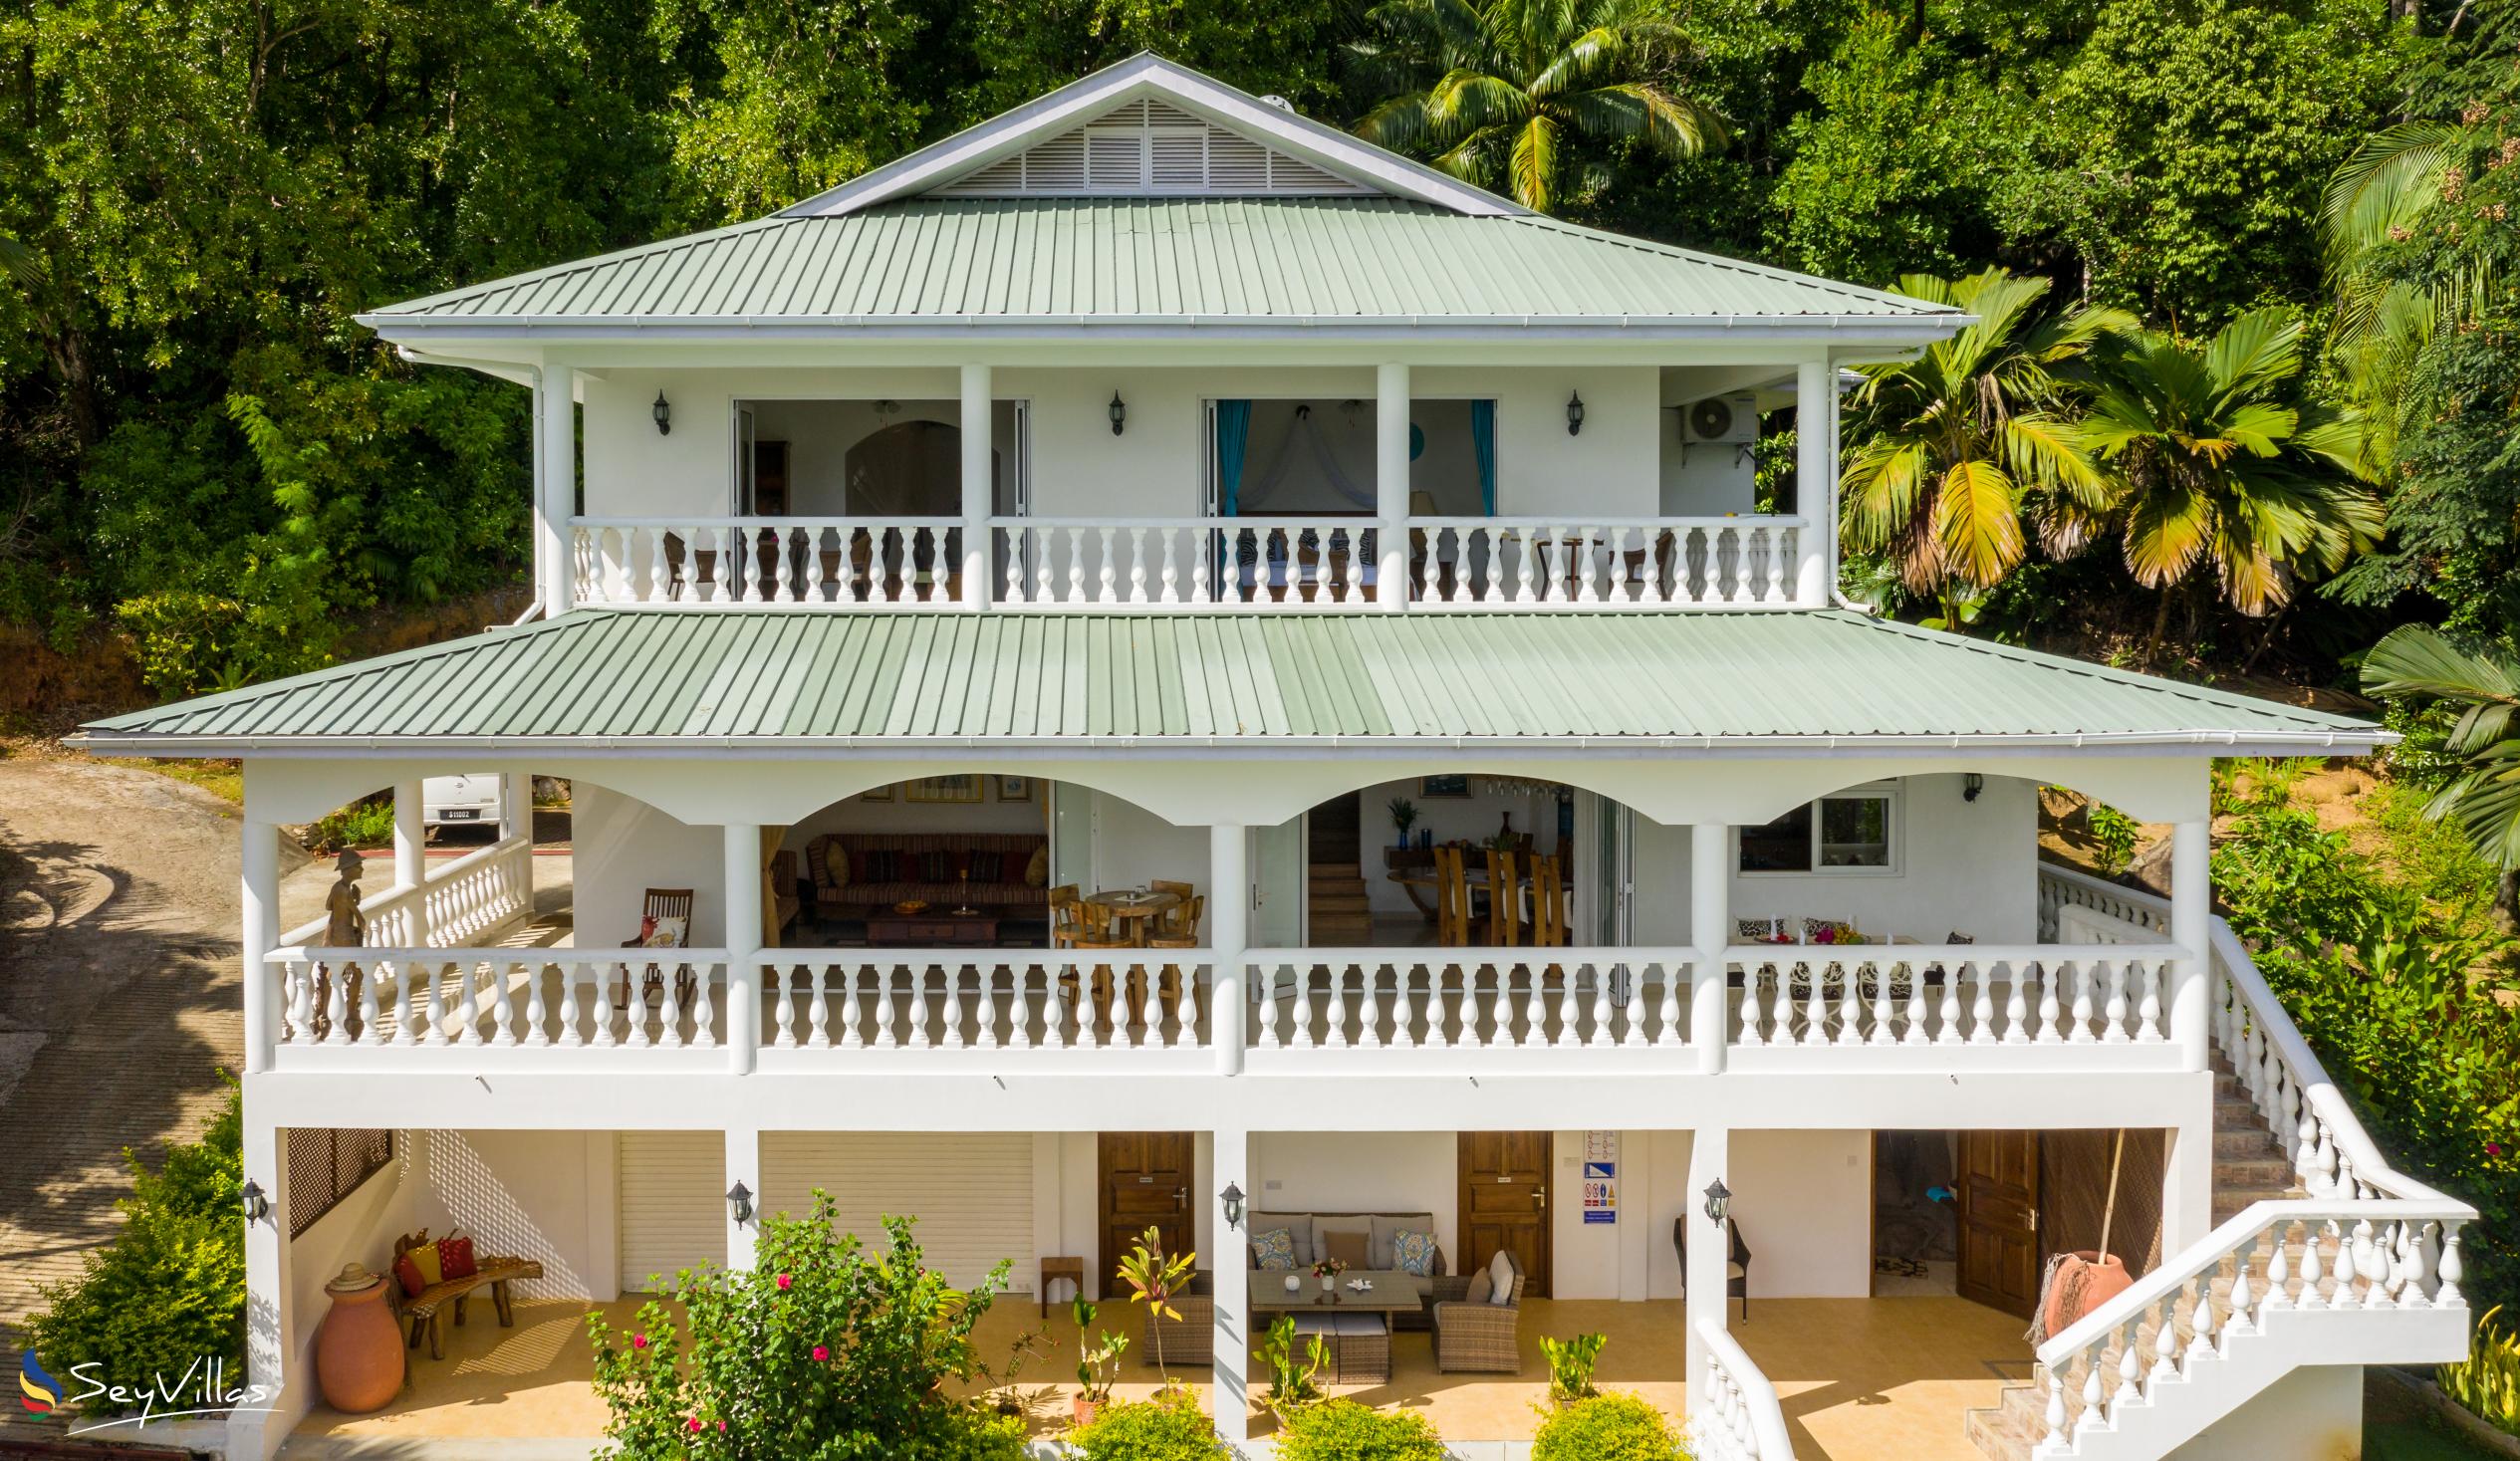 Photo 9: Villa Karibu - Outdoor area - Mahé (Seychelles)